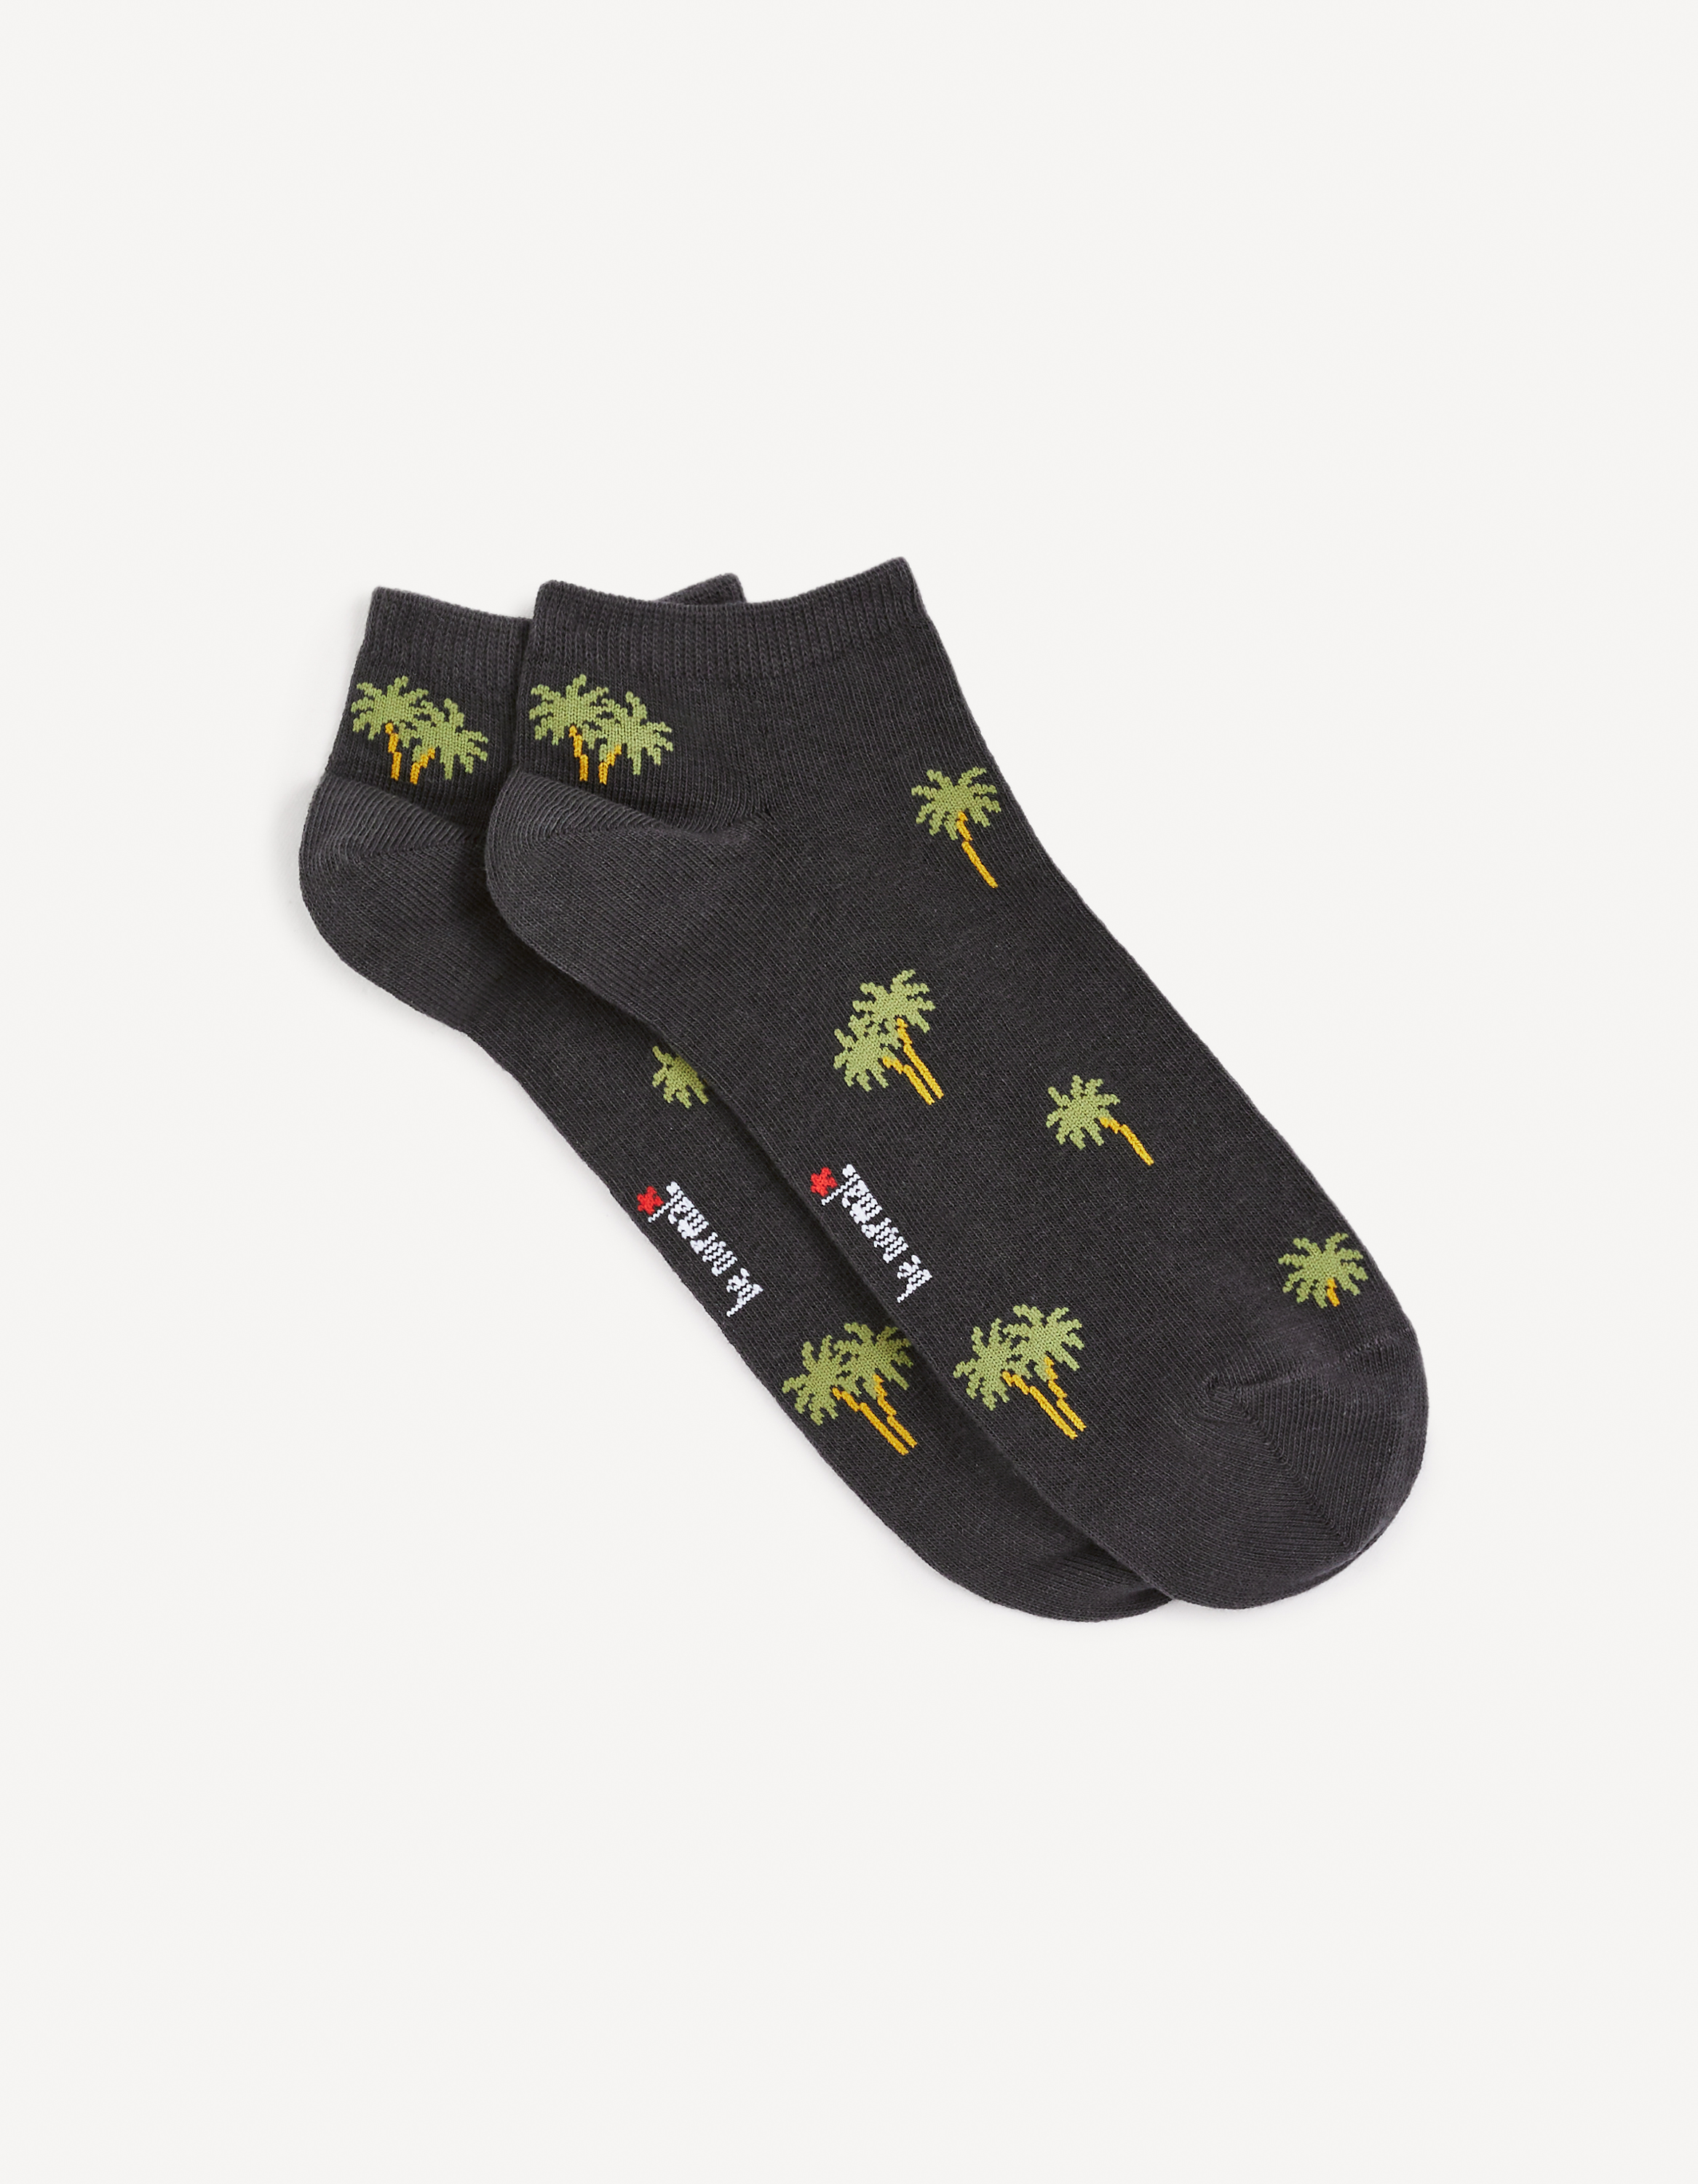 Celio Patterned Socks Gisomipalm - Mens